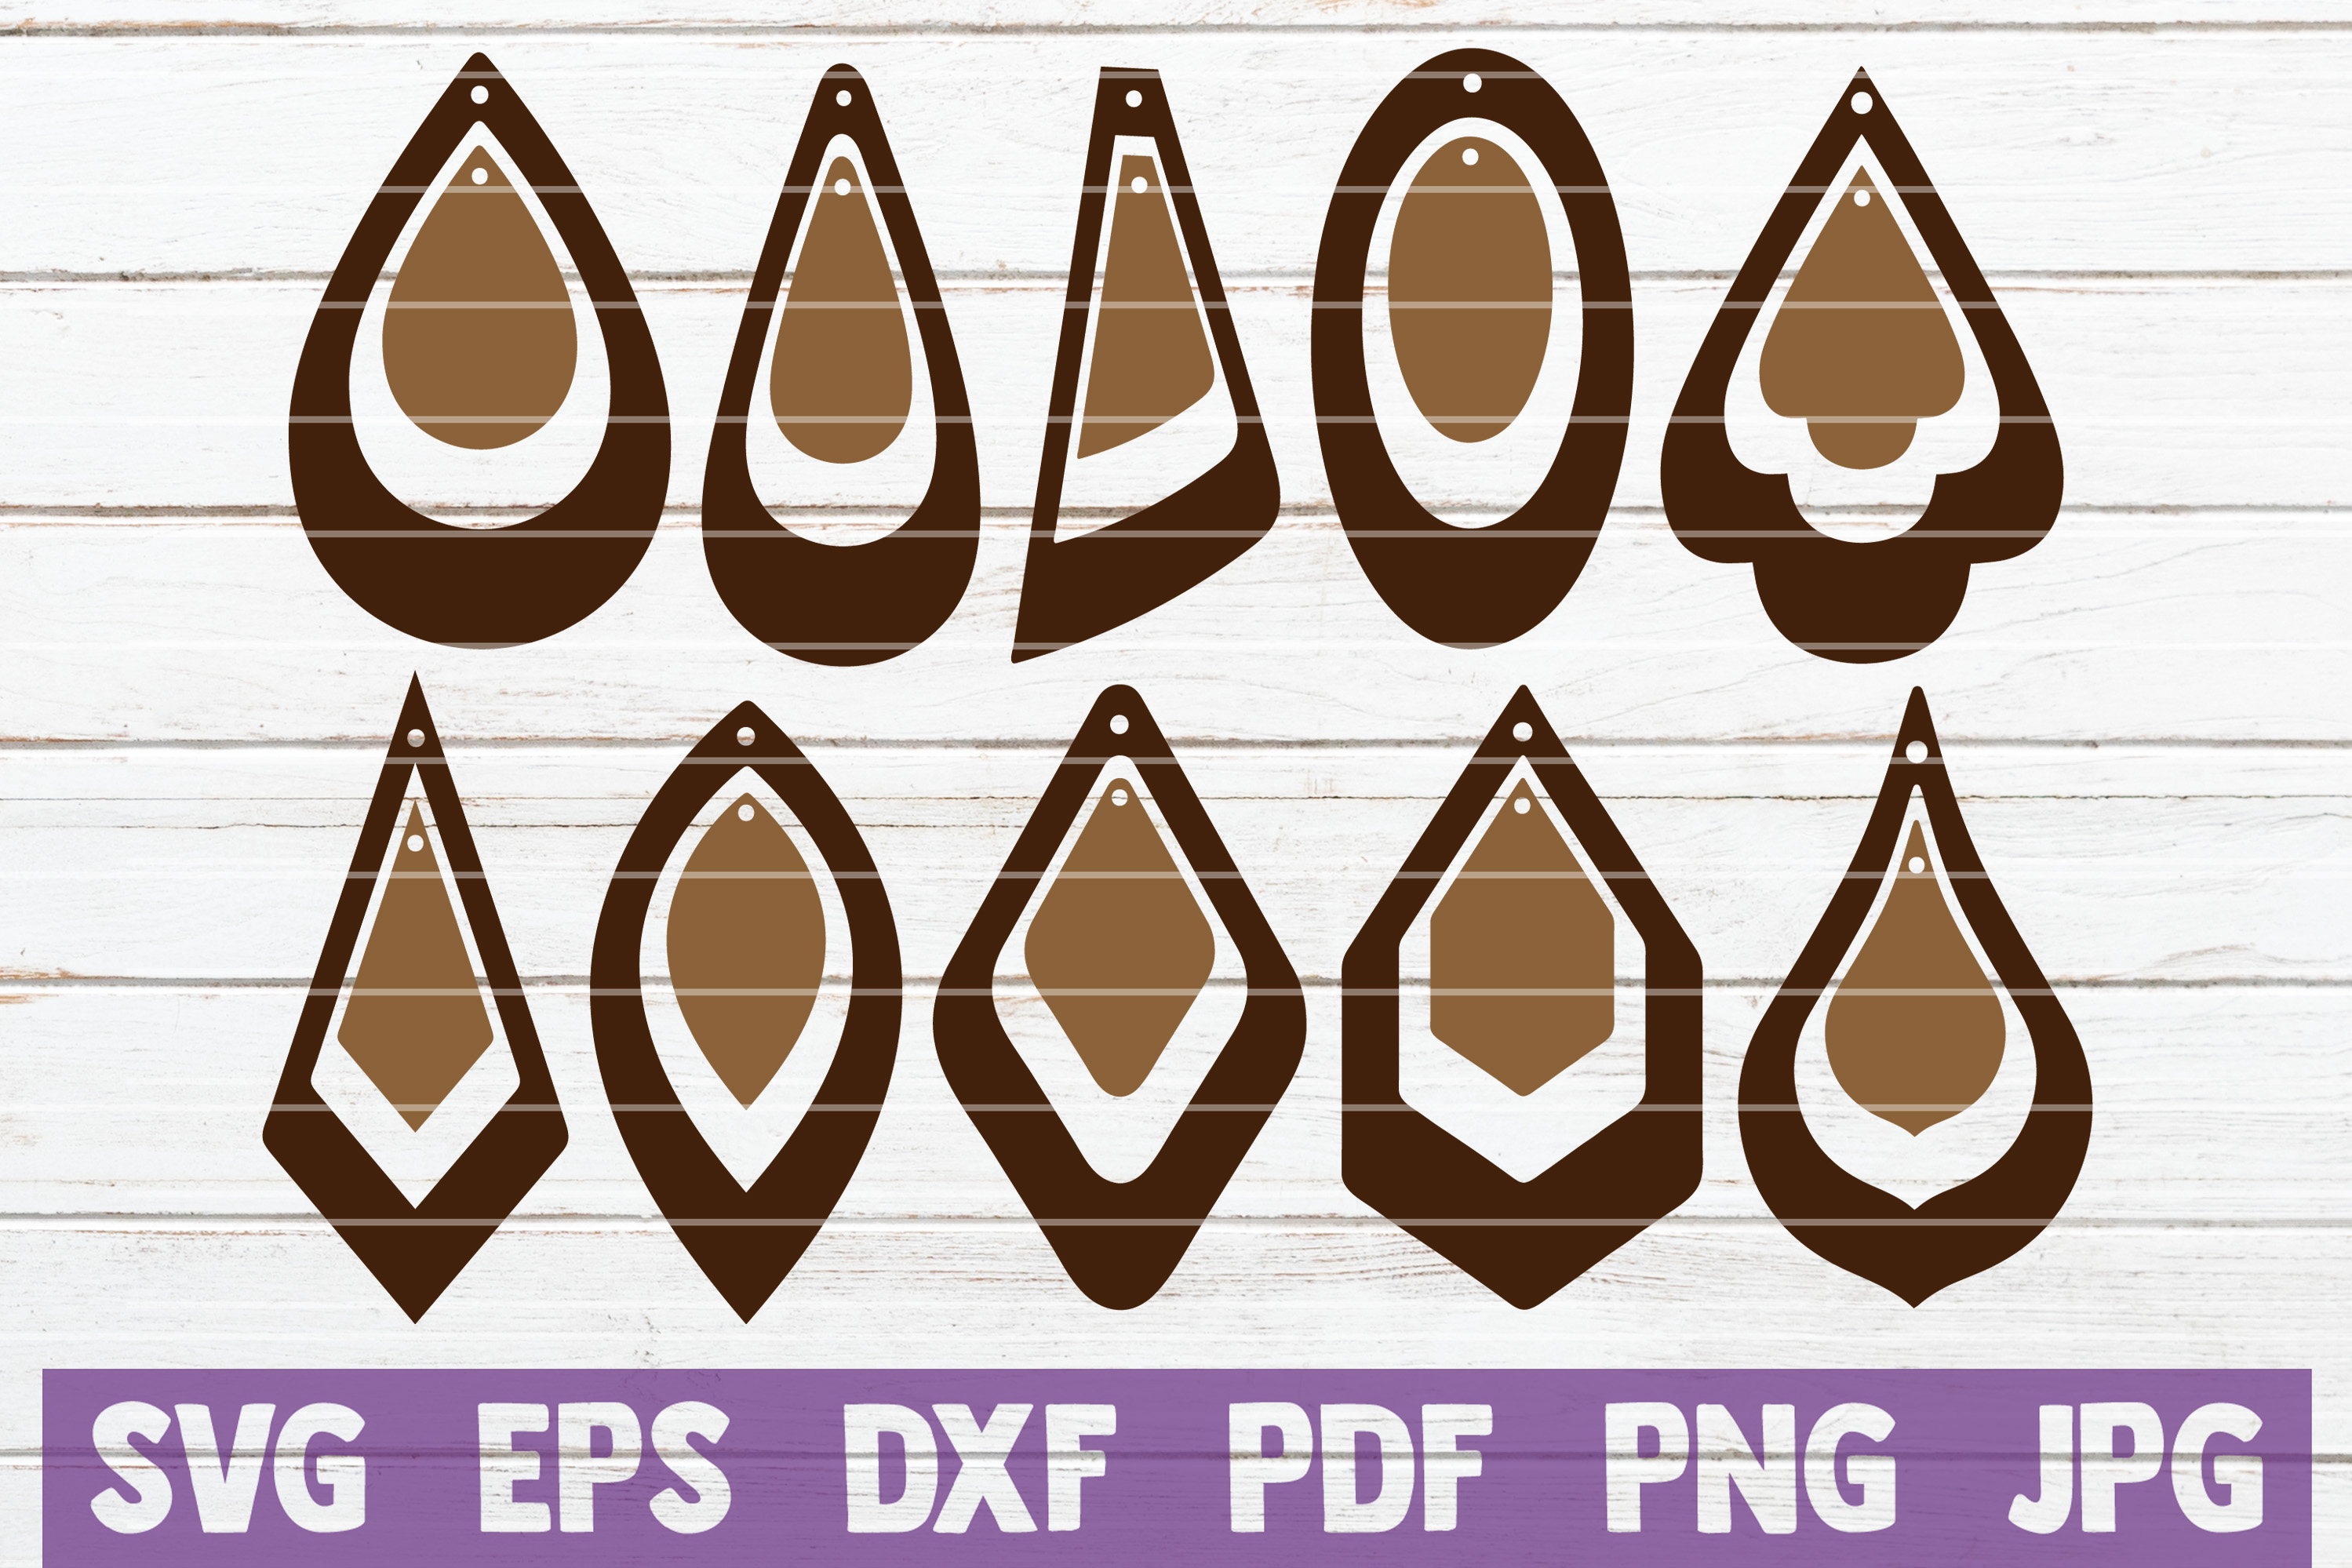 Download 20 Hanging Earrings SVG Cut Files (217953) | Cut Files ...